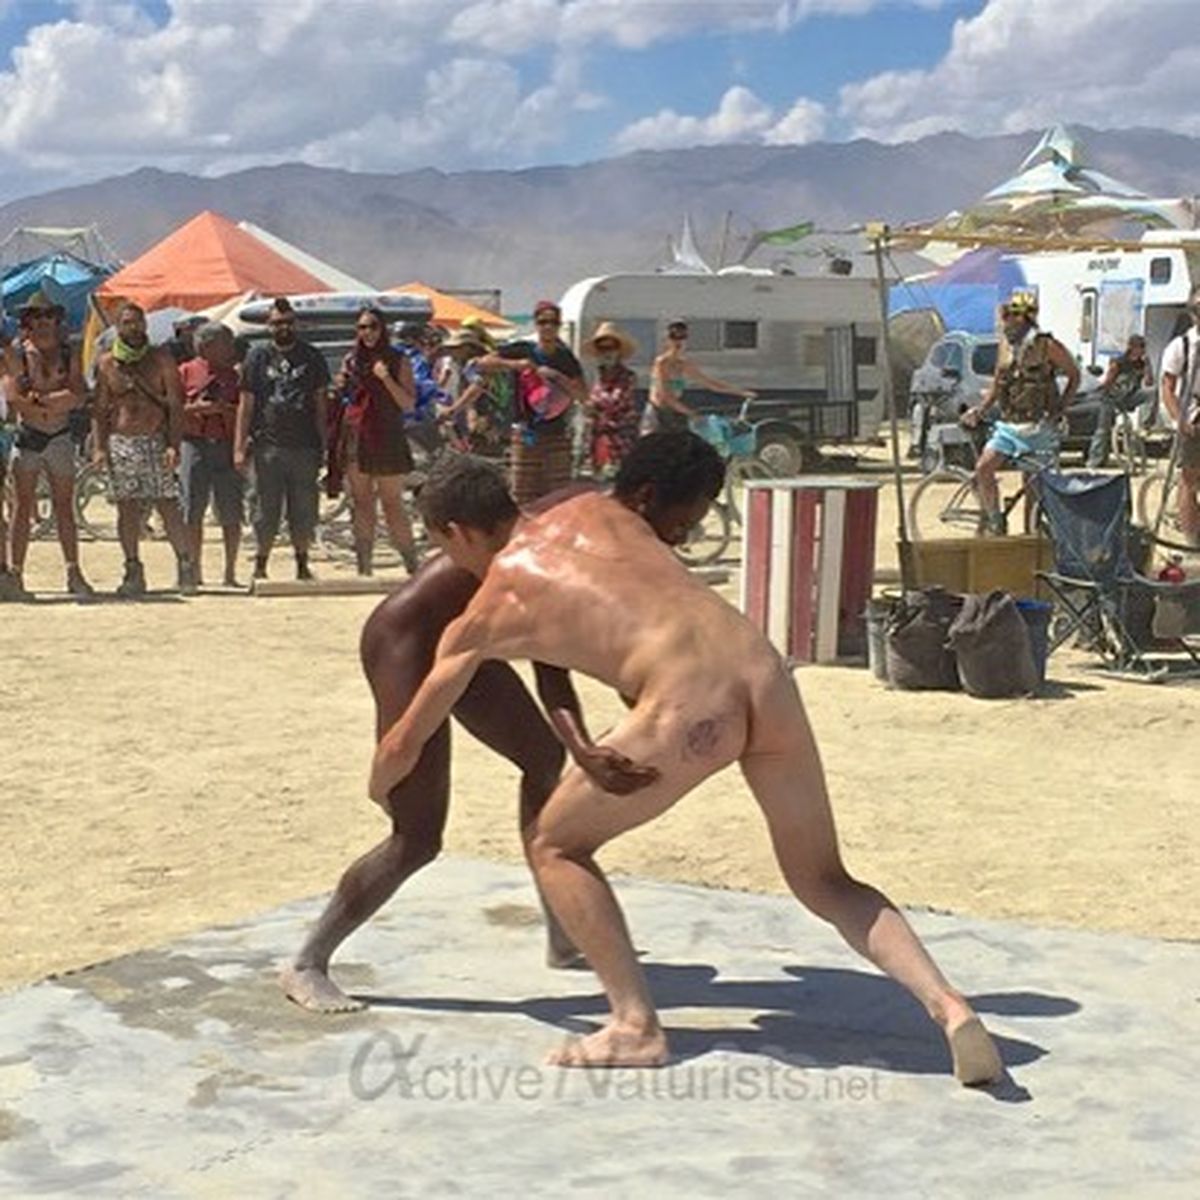 https://www.nudismlife.com/galleries/public_nudity/burning_man/active_naturists/active_naturists_013.jpg